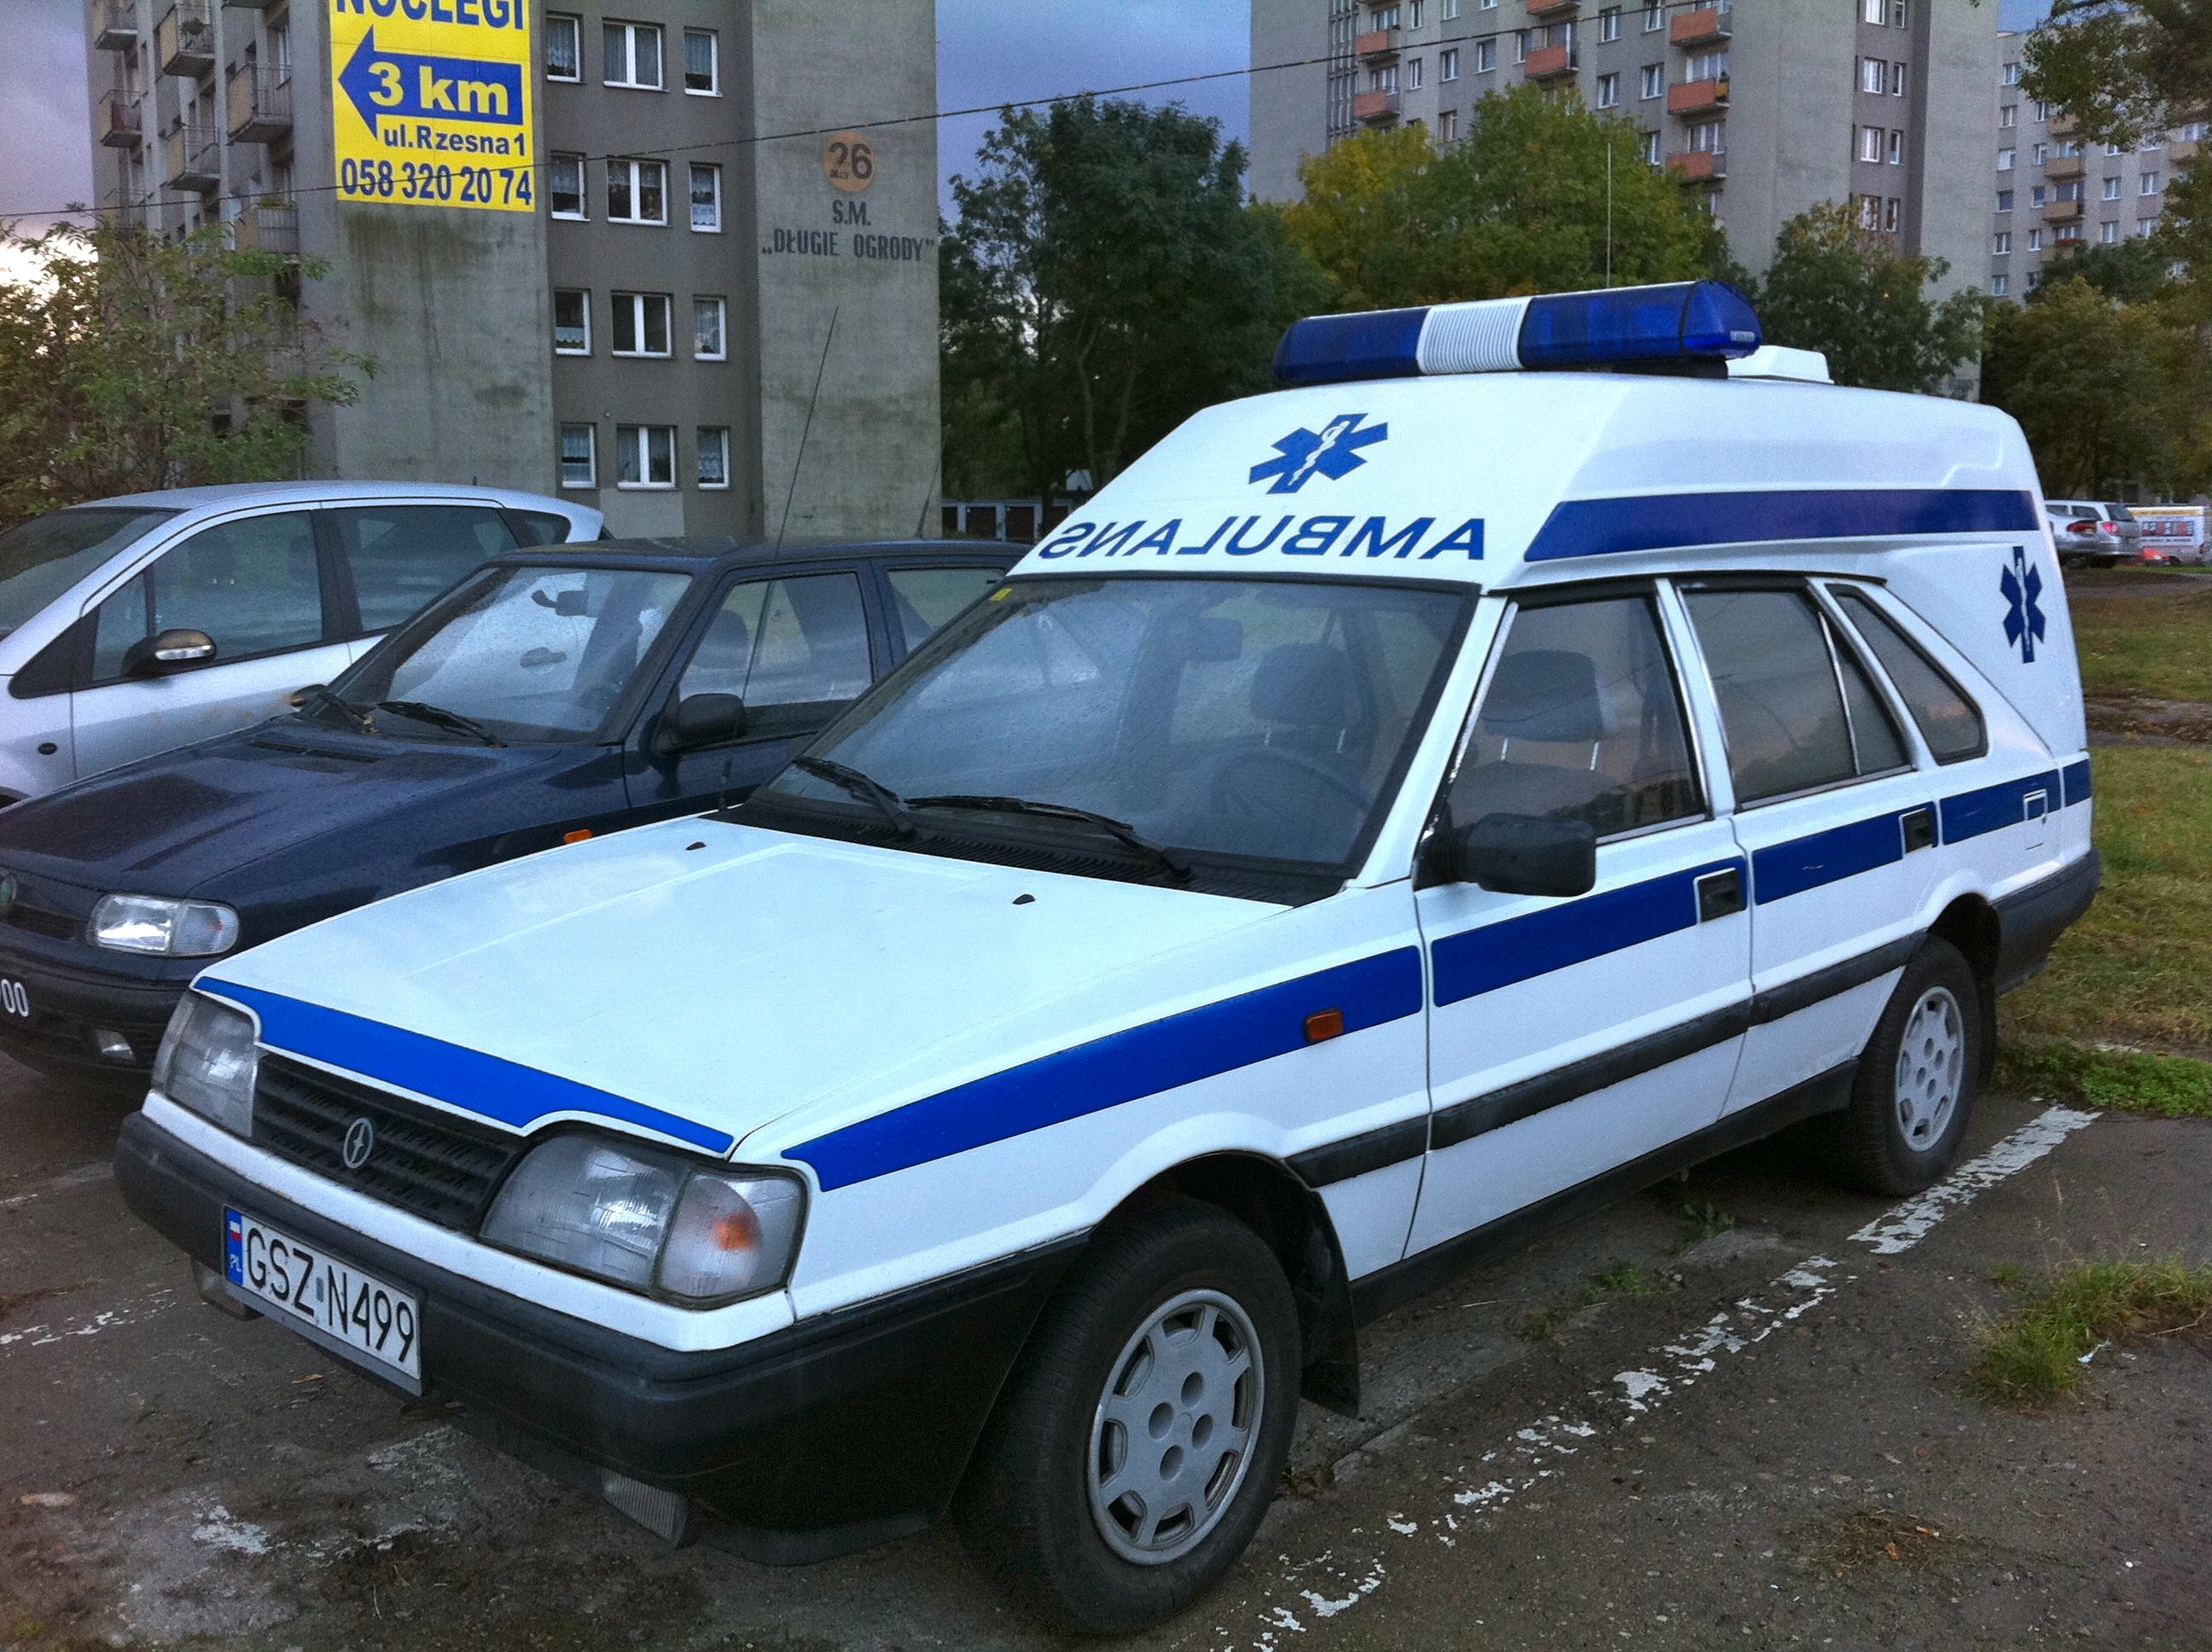 FSO_Polonez_Cargo_based_ambulance_in_Gdansk.jpg